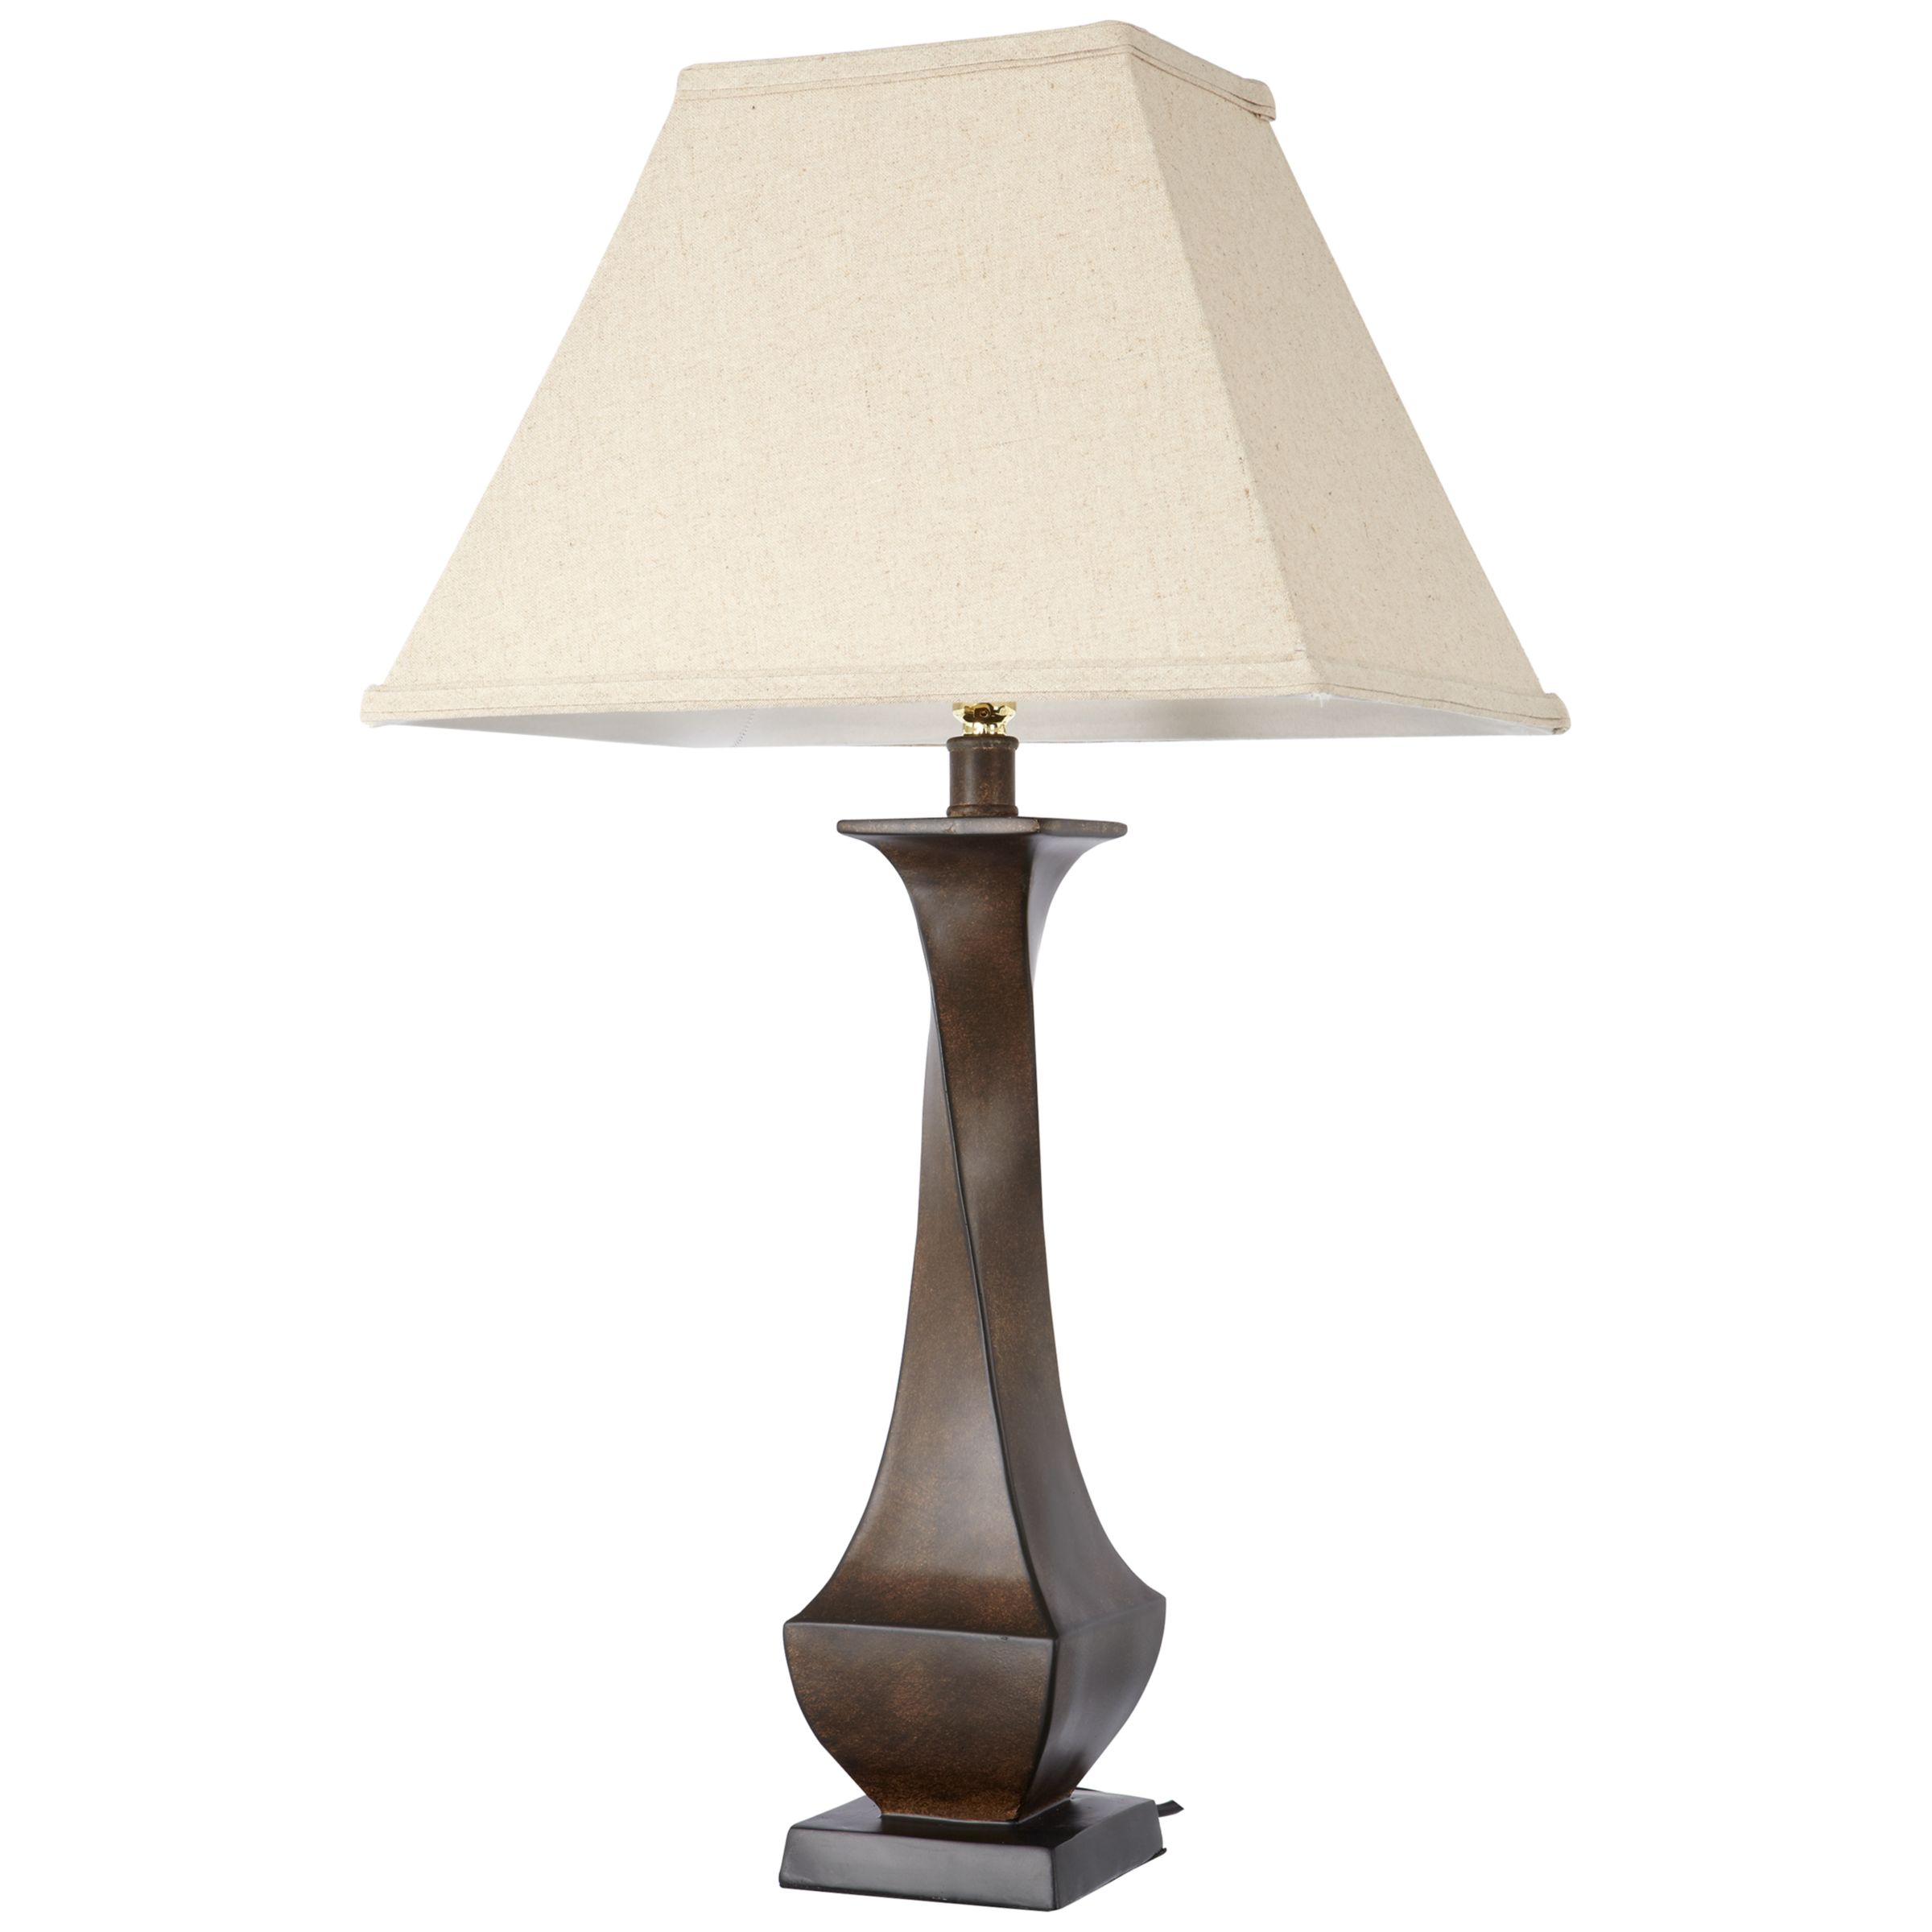 John Lewis Ella Table Lamp 154239